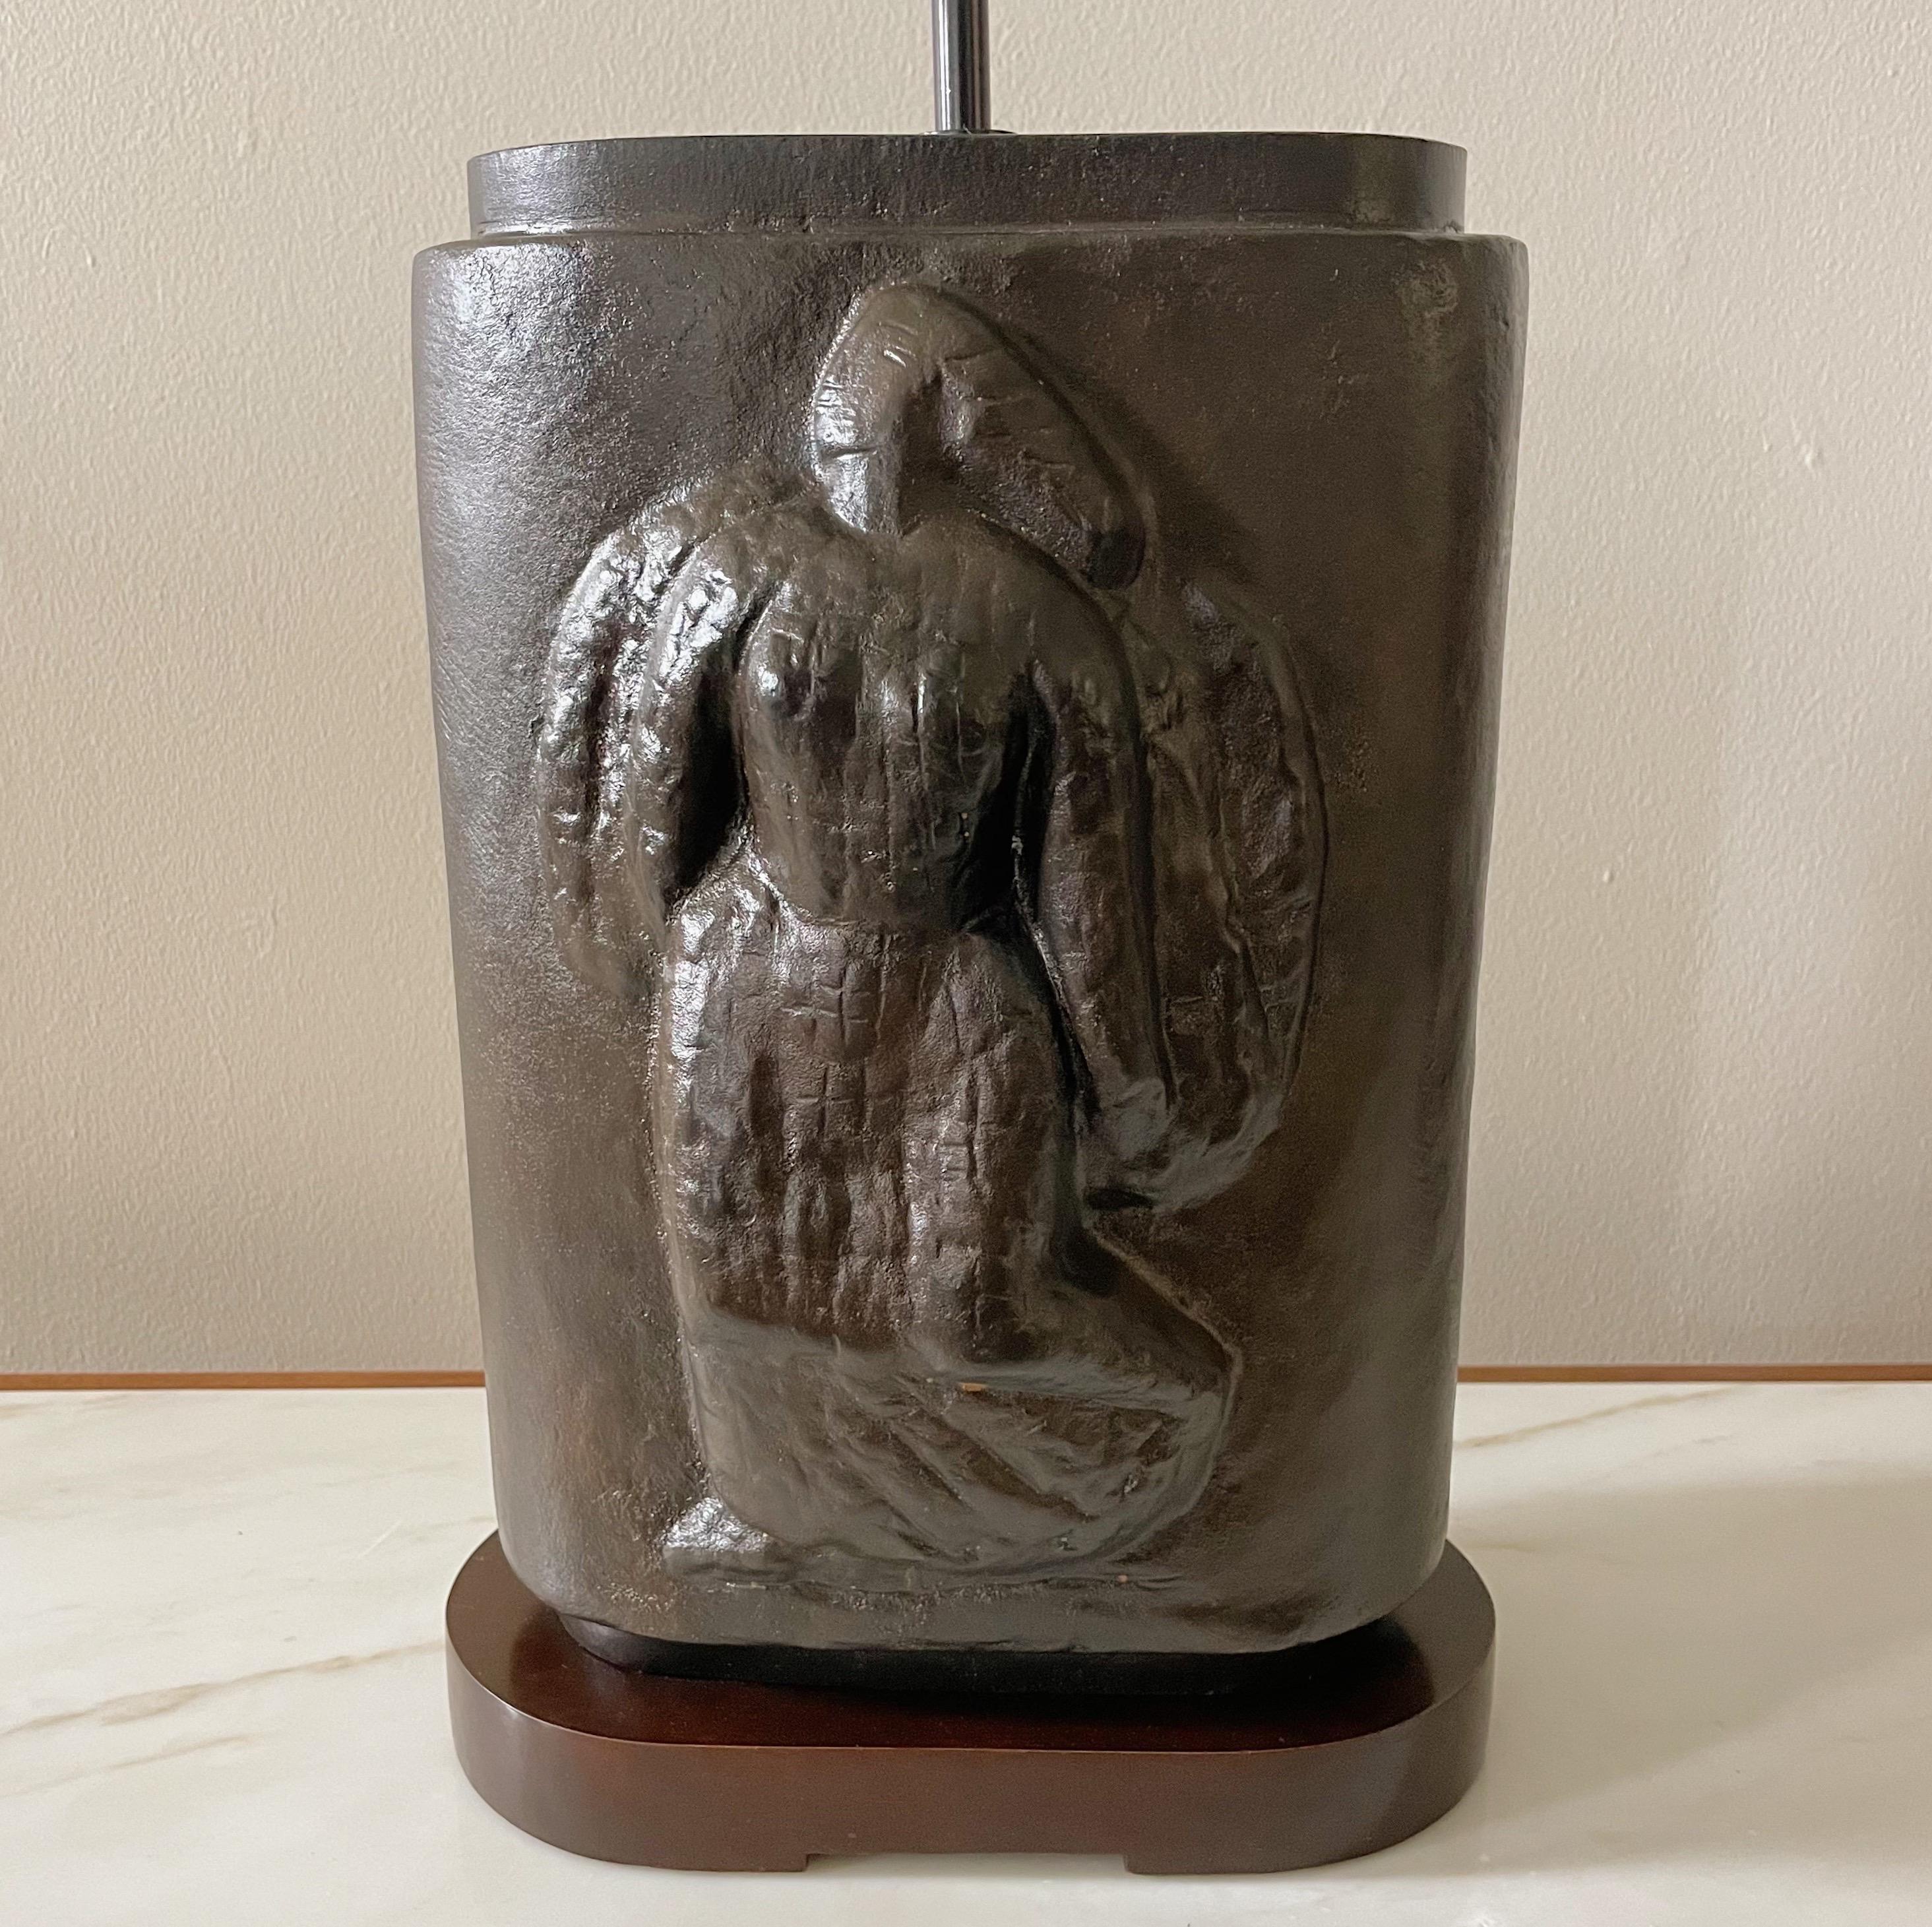 American Wpa Artist Minna Harkavy '1887 – 1987' Pair Opposing Bronze Table Lamps For Sale